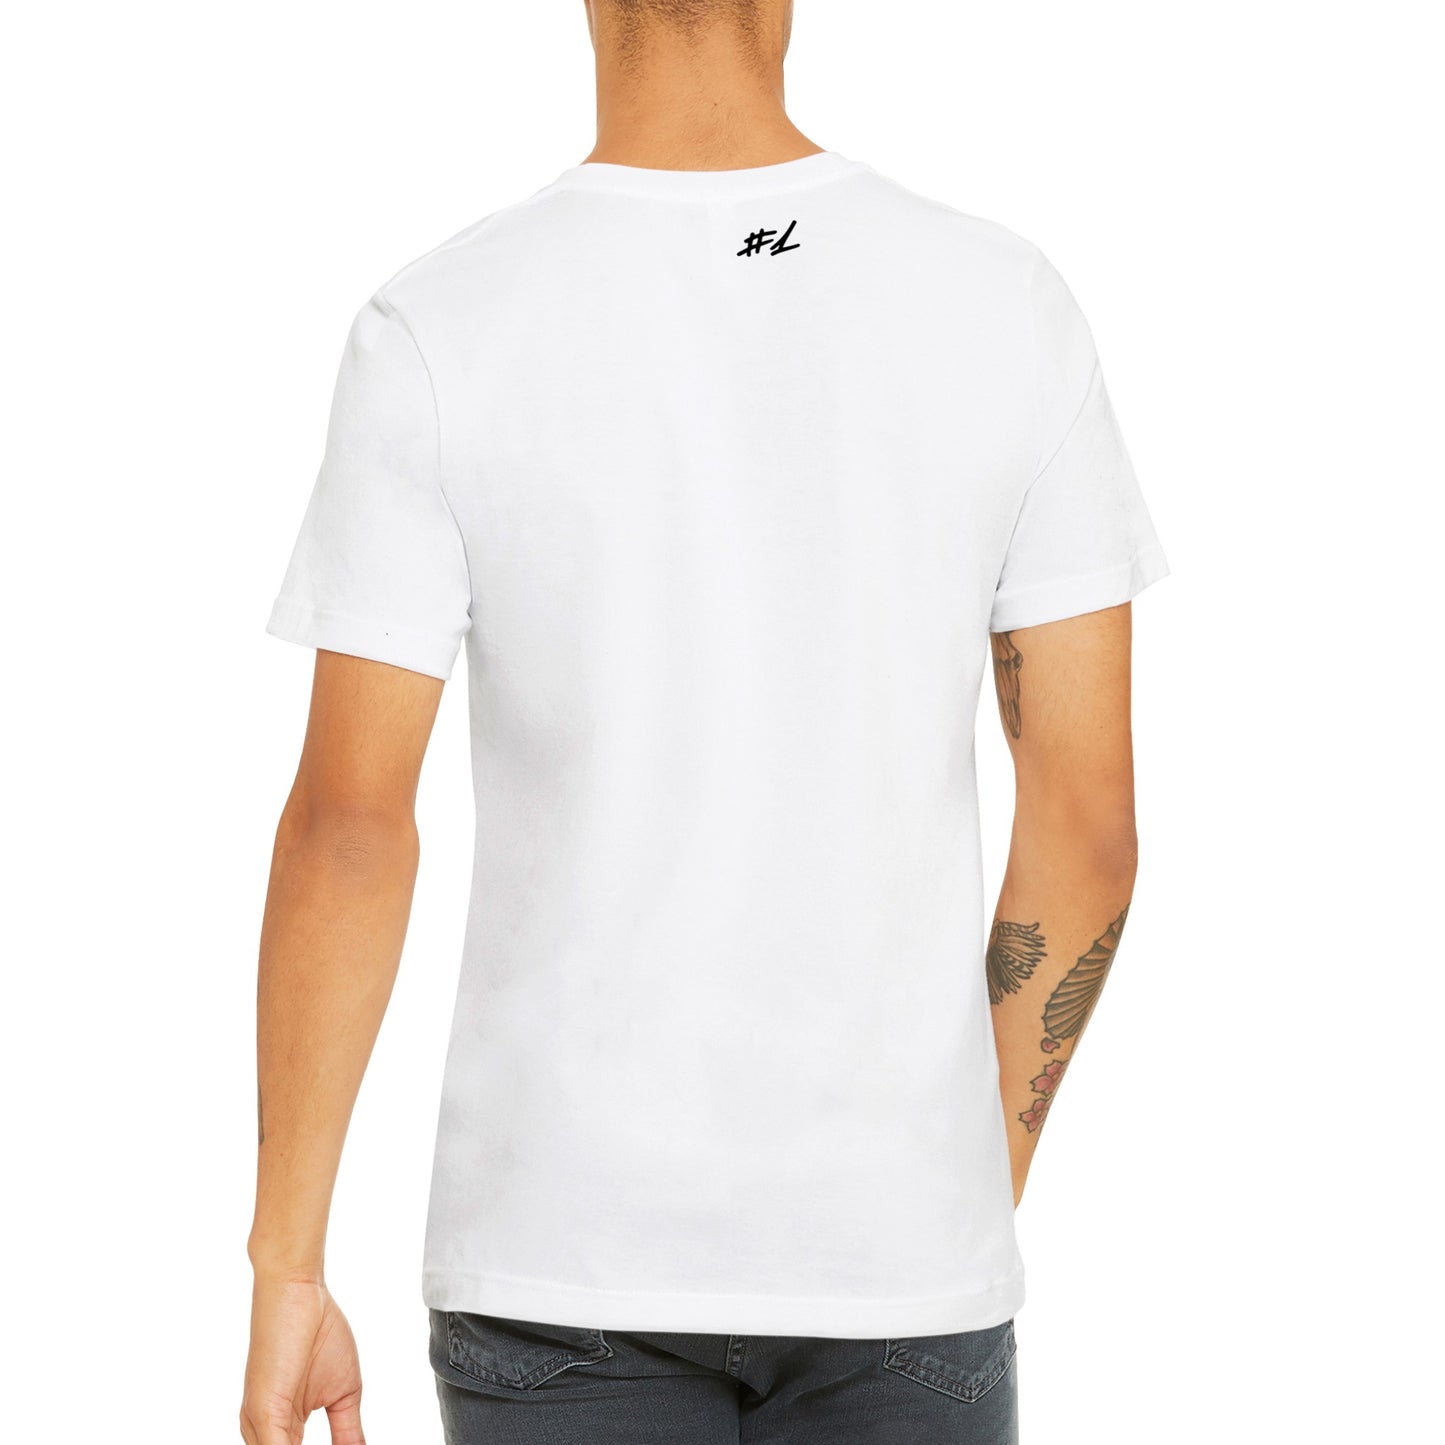 Premium Unisex Soccer T-shirt WHITE